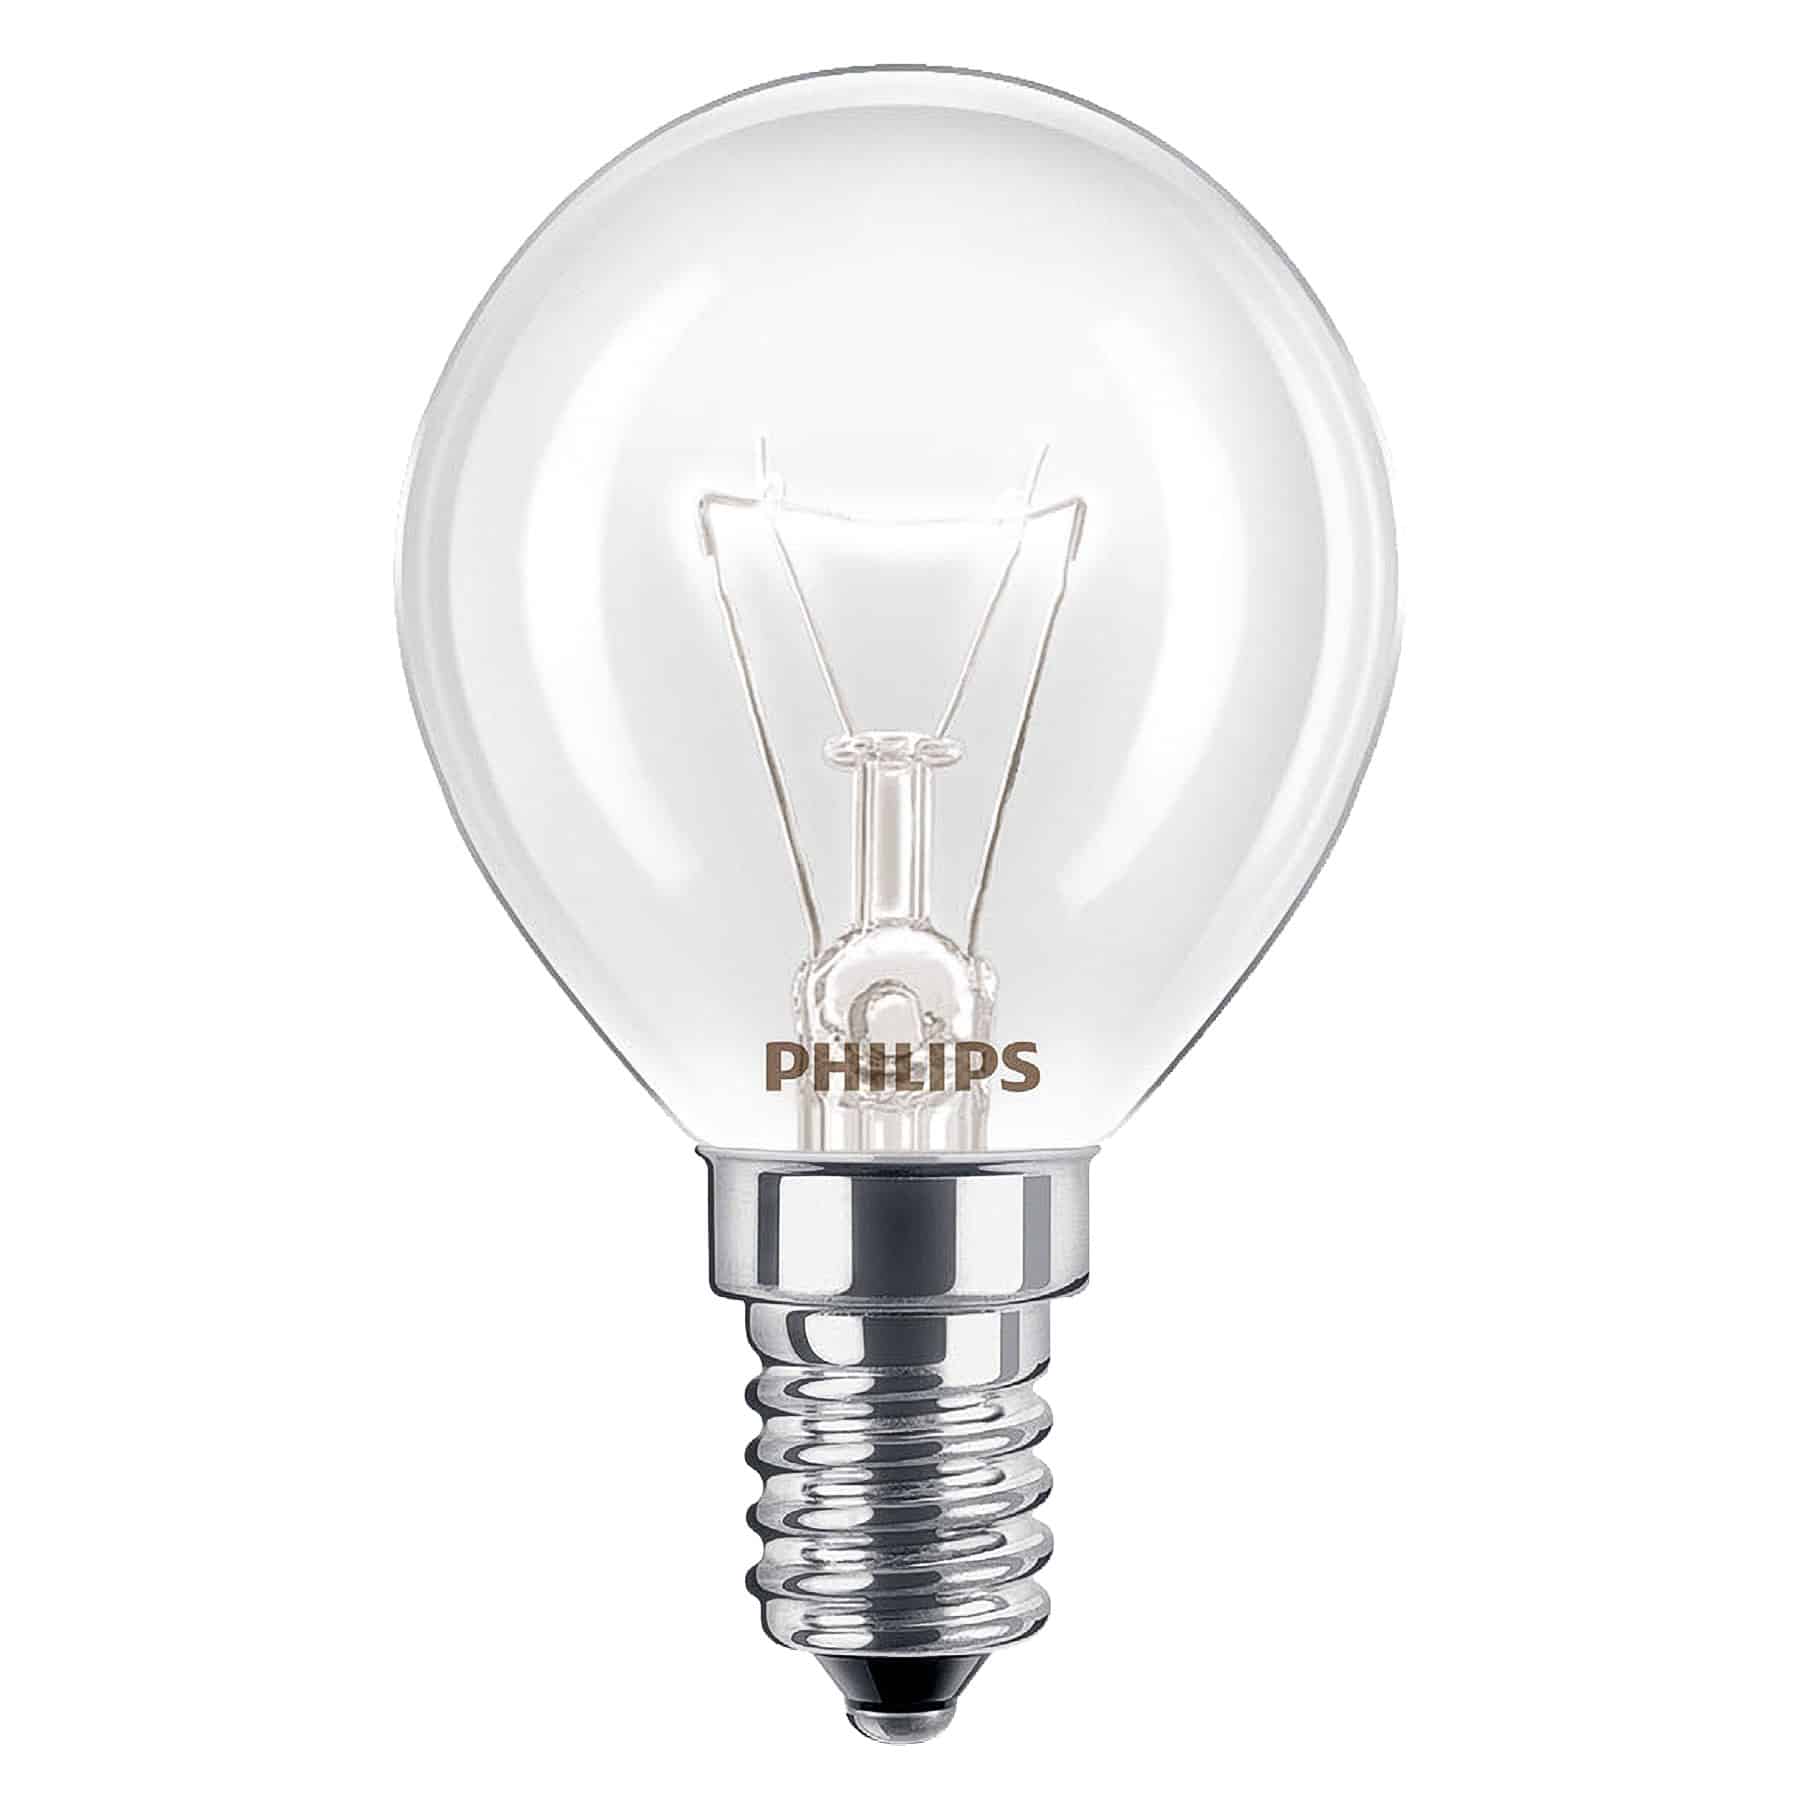 Ampoule LED E14 E27, 220V, variable, Vintage, Filament, T22, 1W